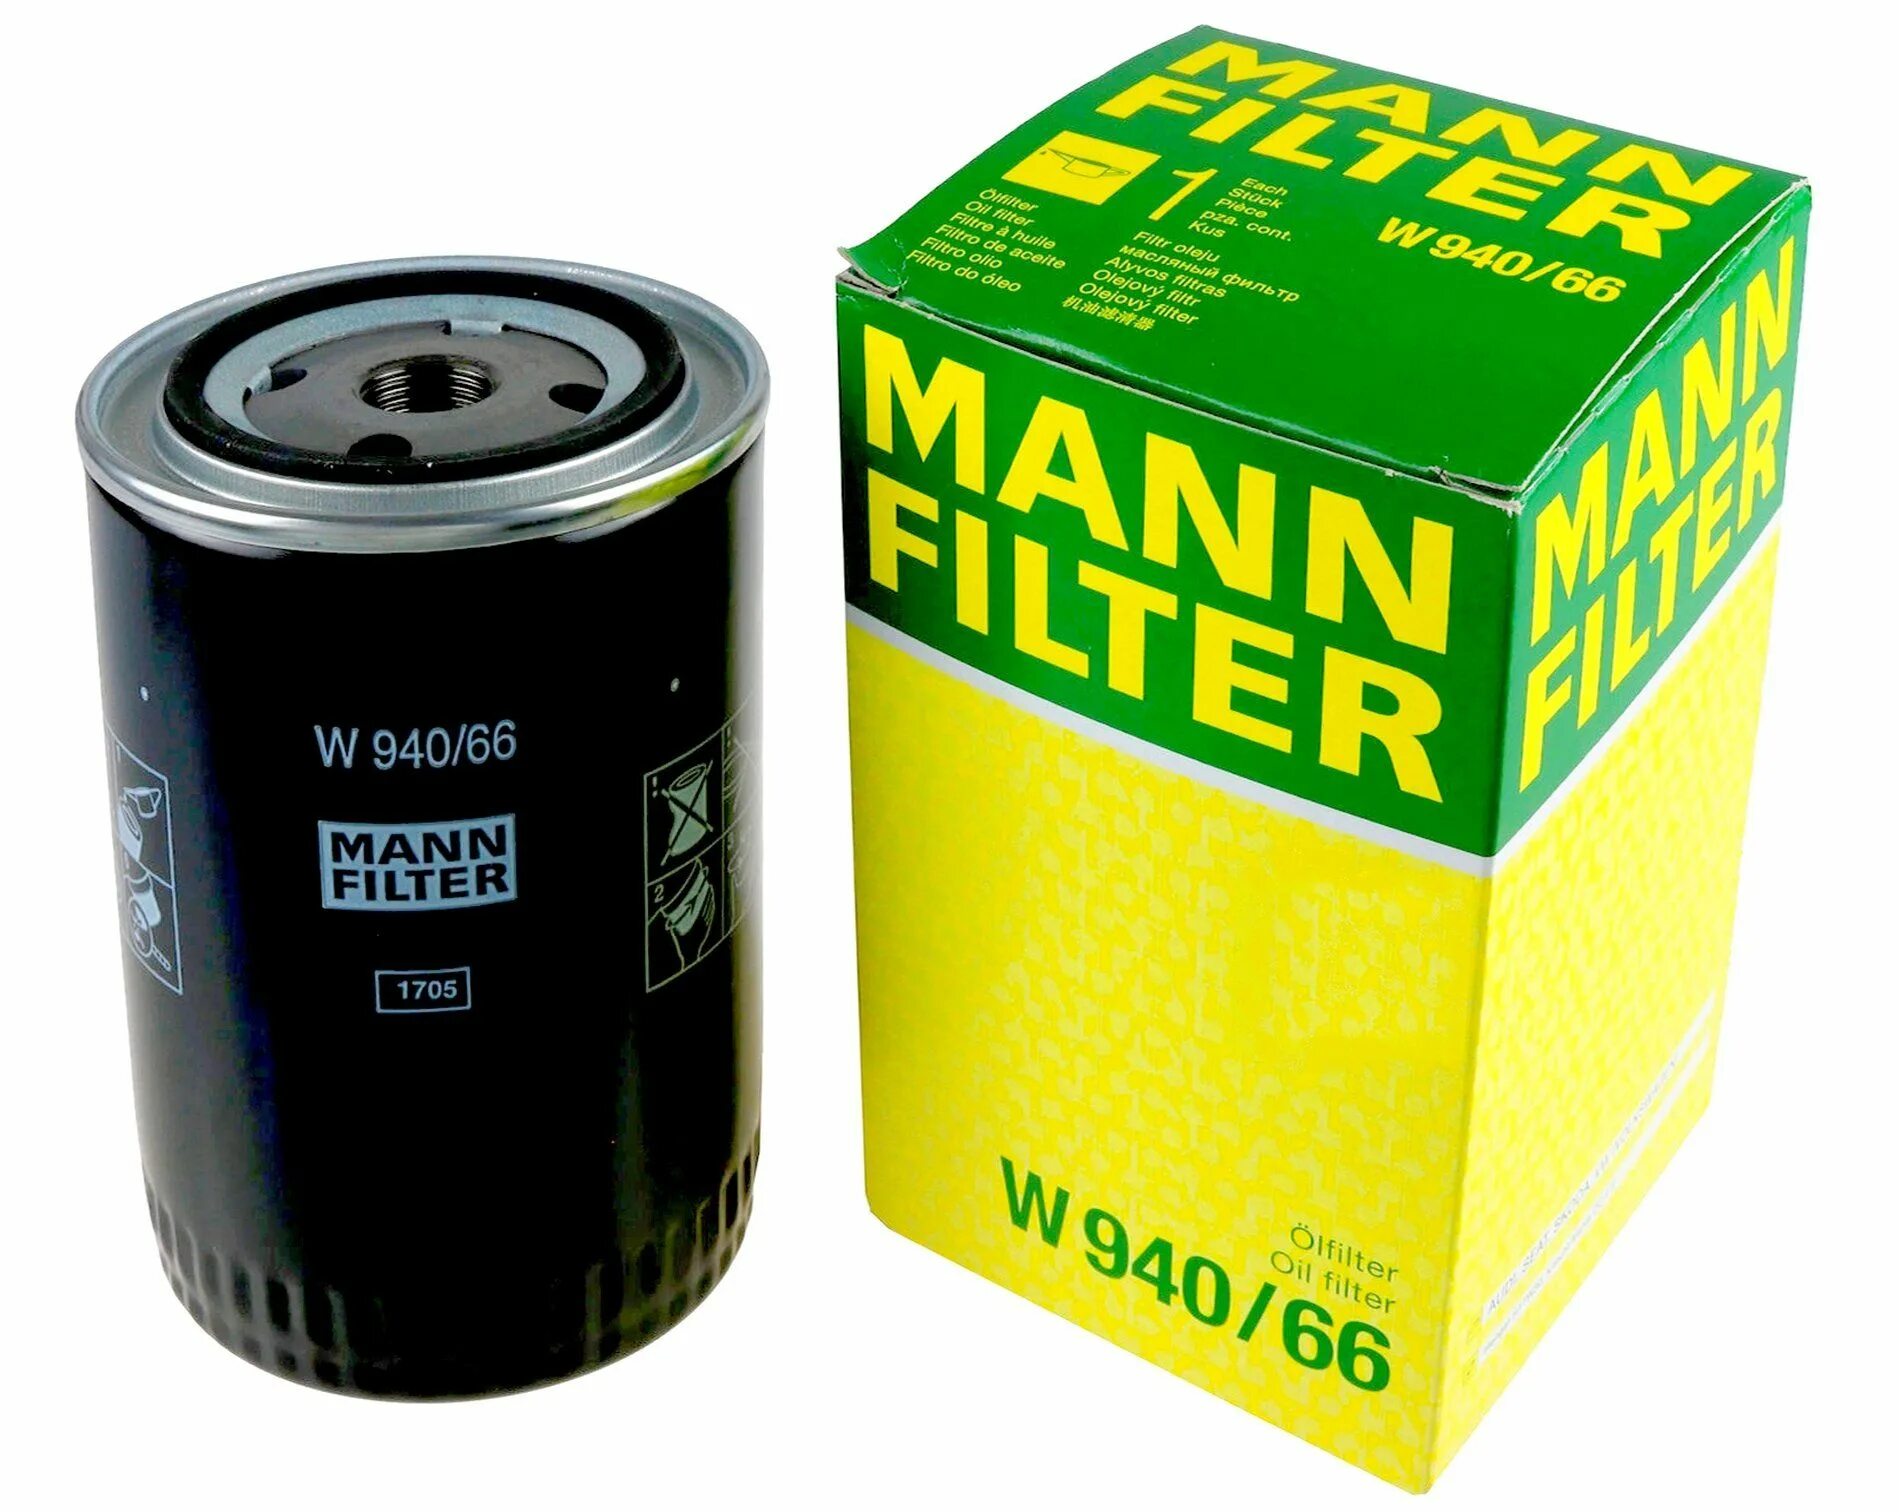 Масляный манн. Фильтр масляный Mann w940/66. Mann-Filter w 940/66. Фильтр масляный Манн на автомобиль Сааб. OC 470 фильтр масляный.